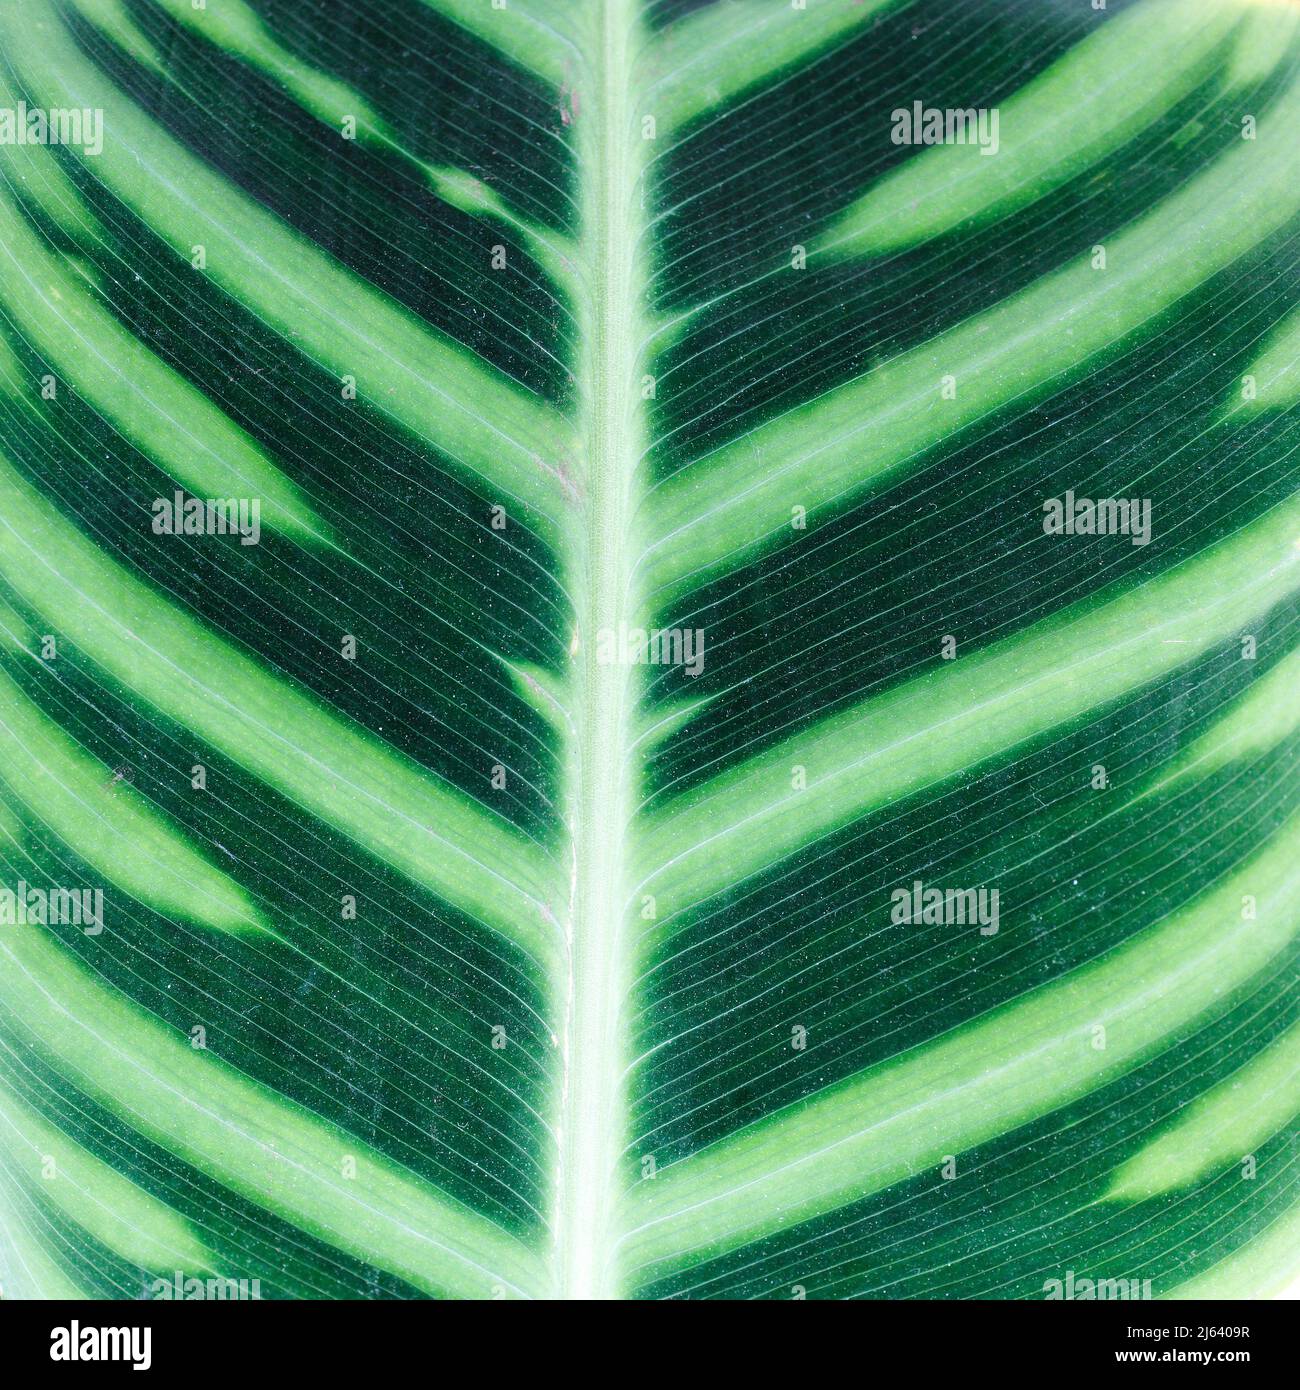 Calatheas leaf texture. square format. Botanical image Stock Photo